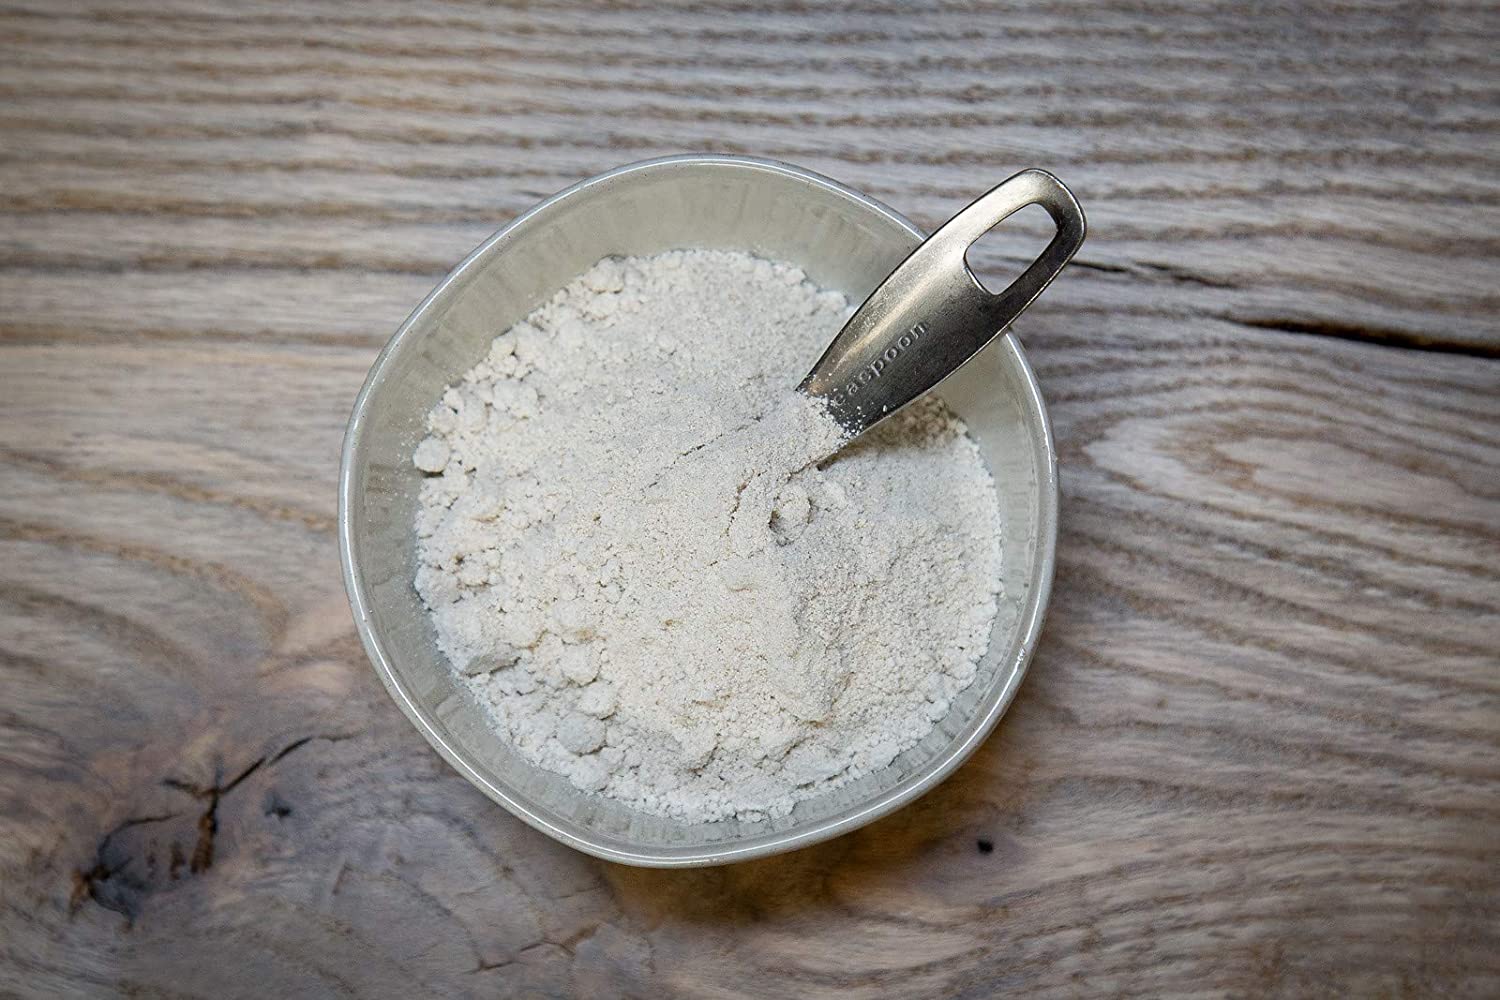 Oat Flour - Organic & Gluten Free, 3 Lbs.